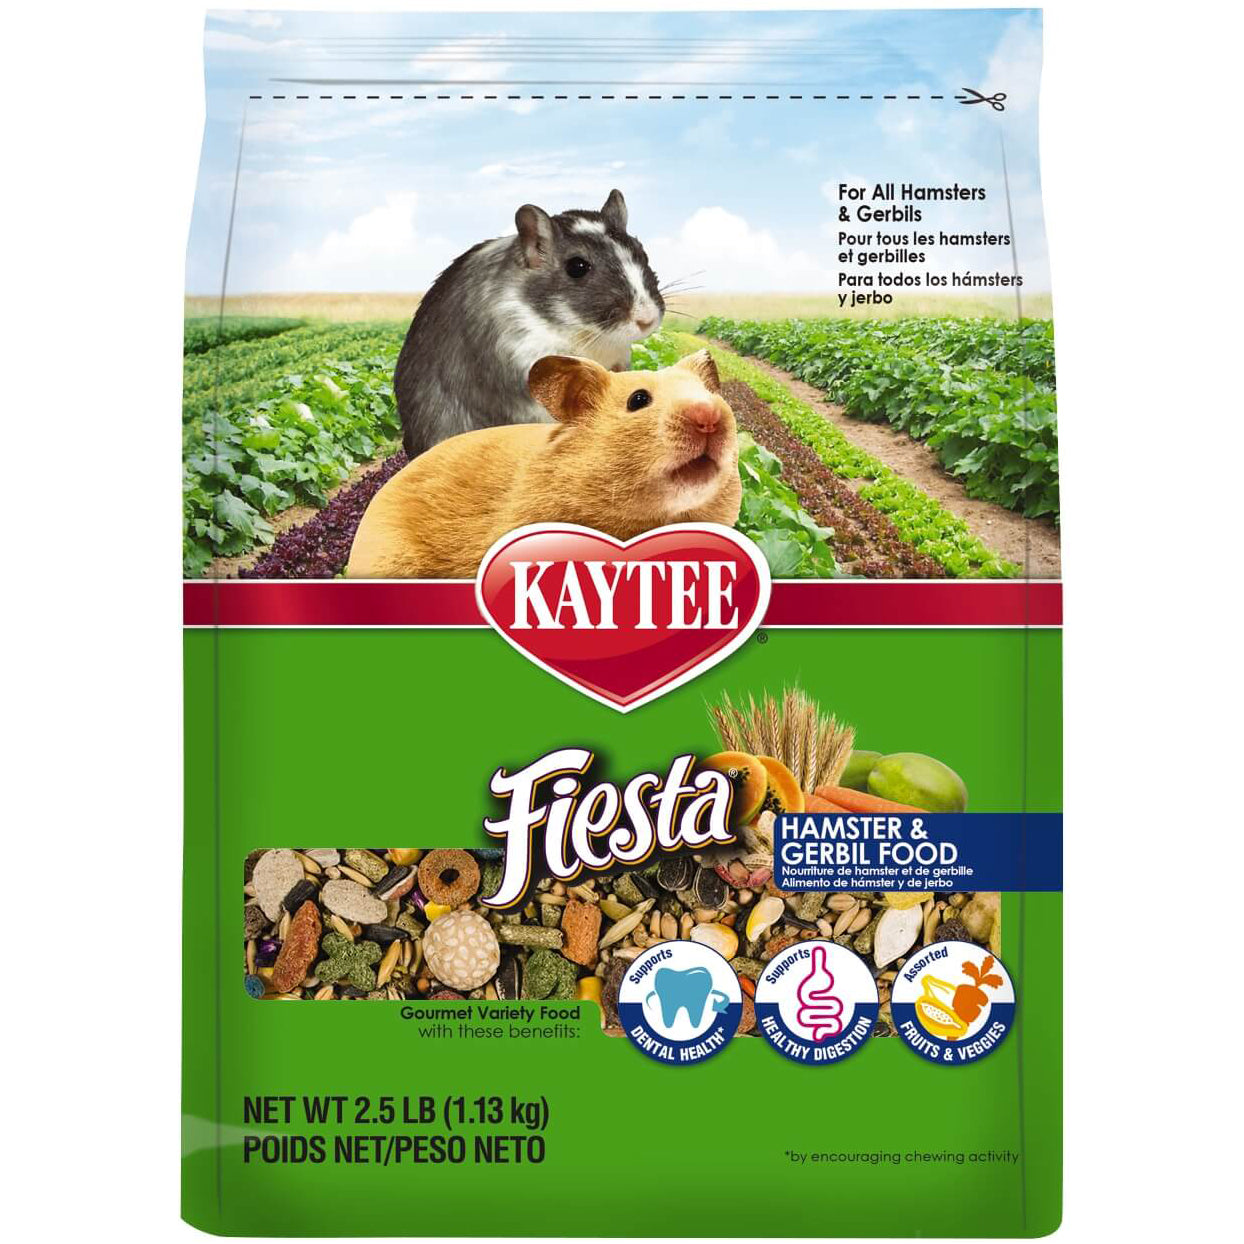 Kaytee® Fiesta® Hamster and Gerbil Food - Critter Country Supply Ltd.